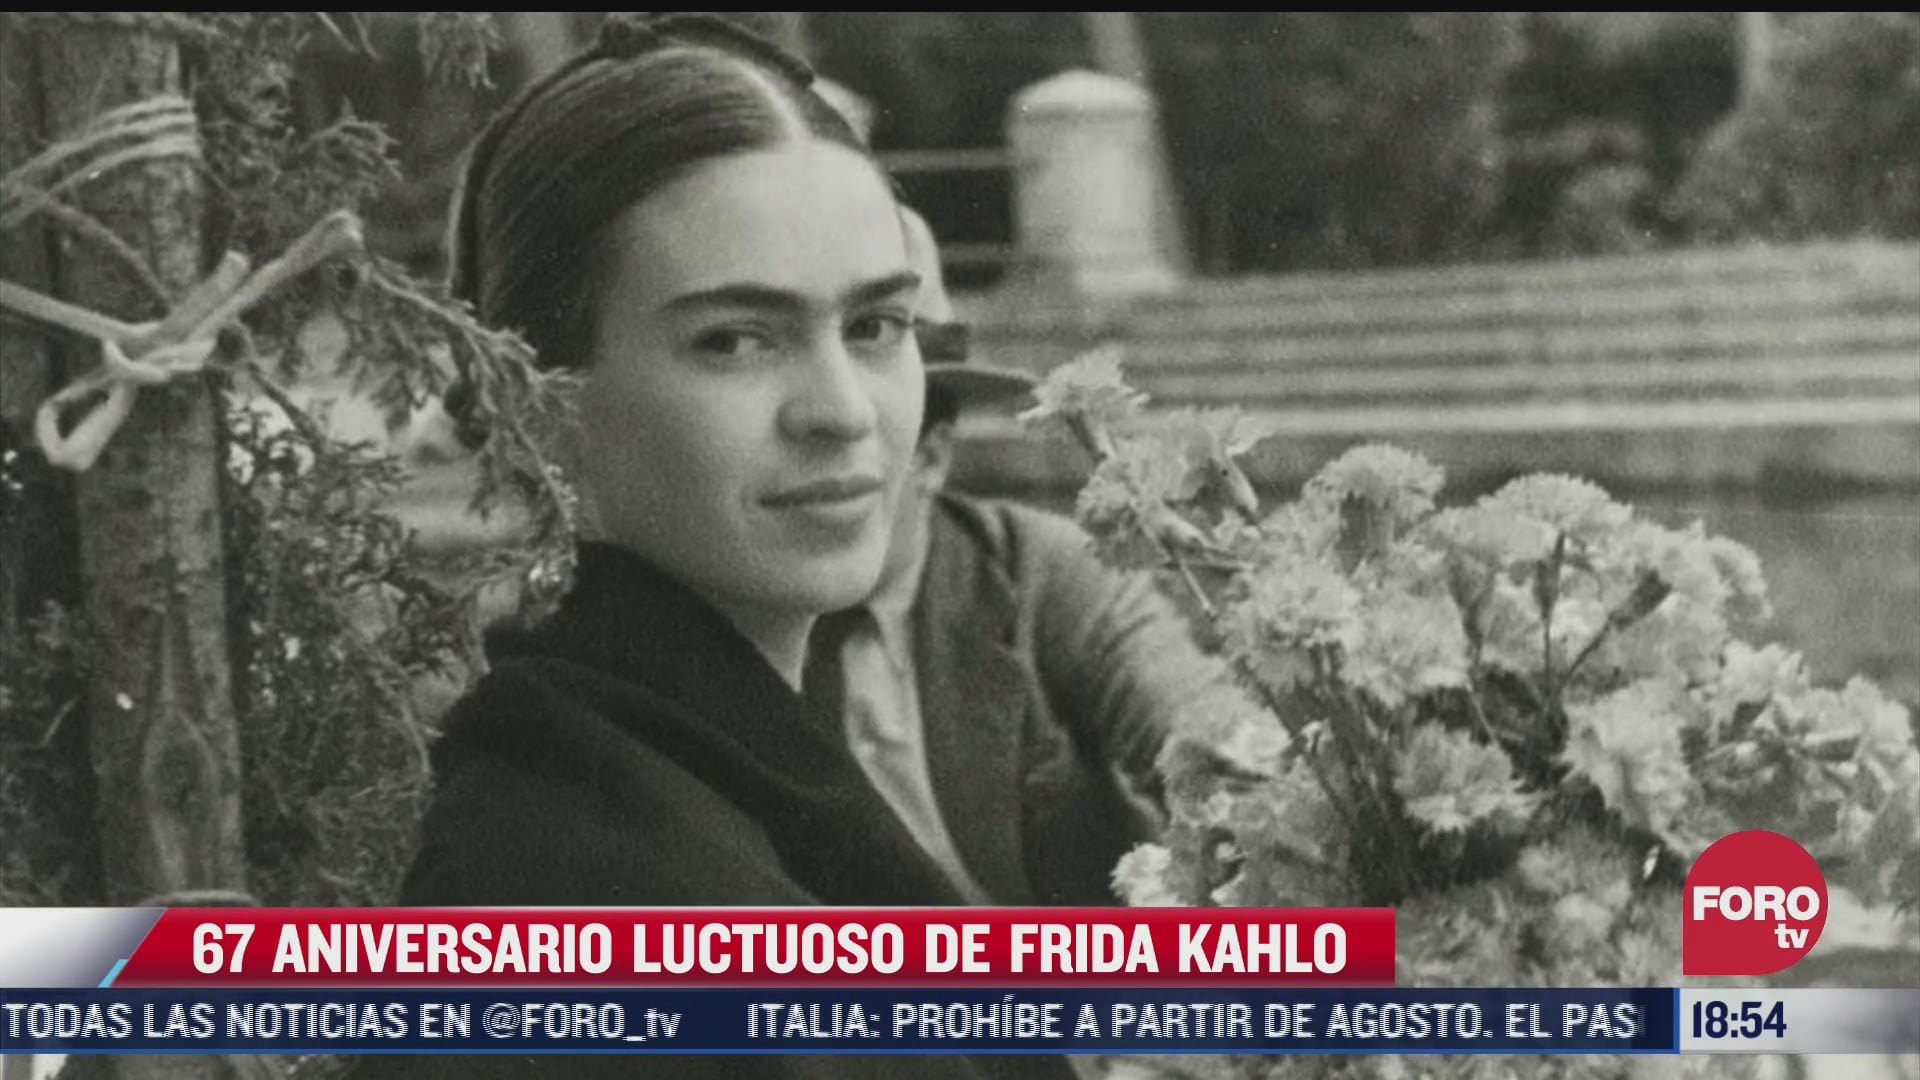 un dia como hoy pero de 1954 murio la gran frida kahlo